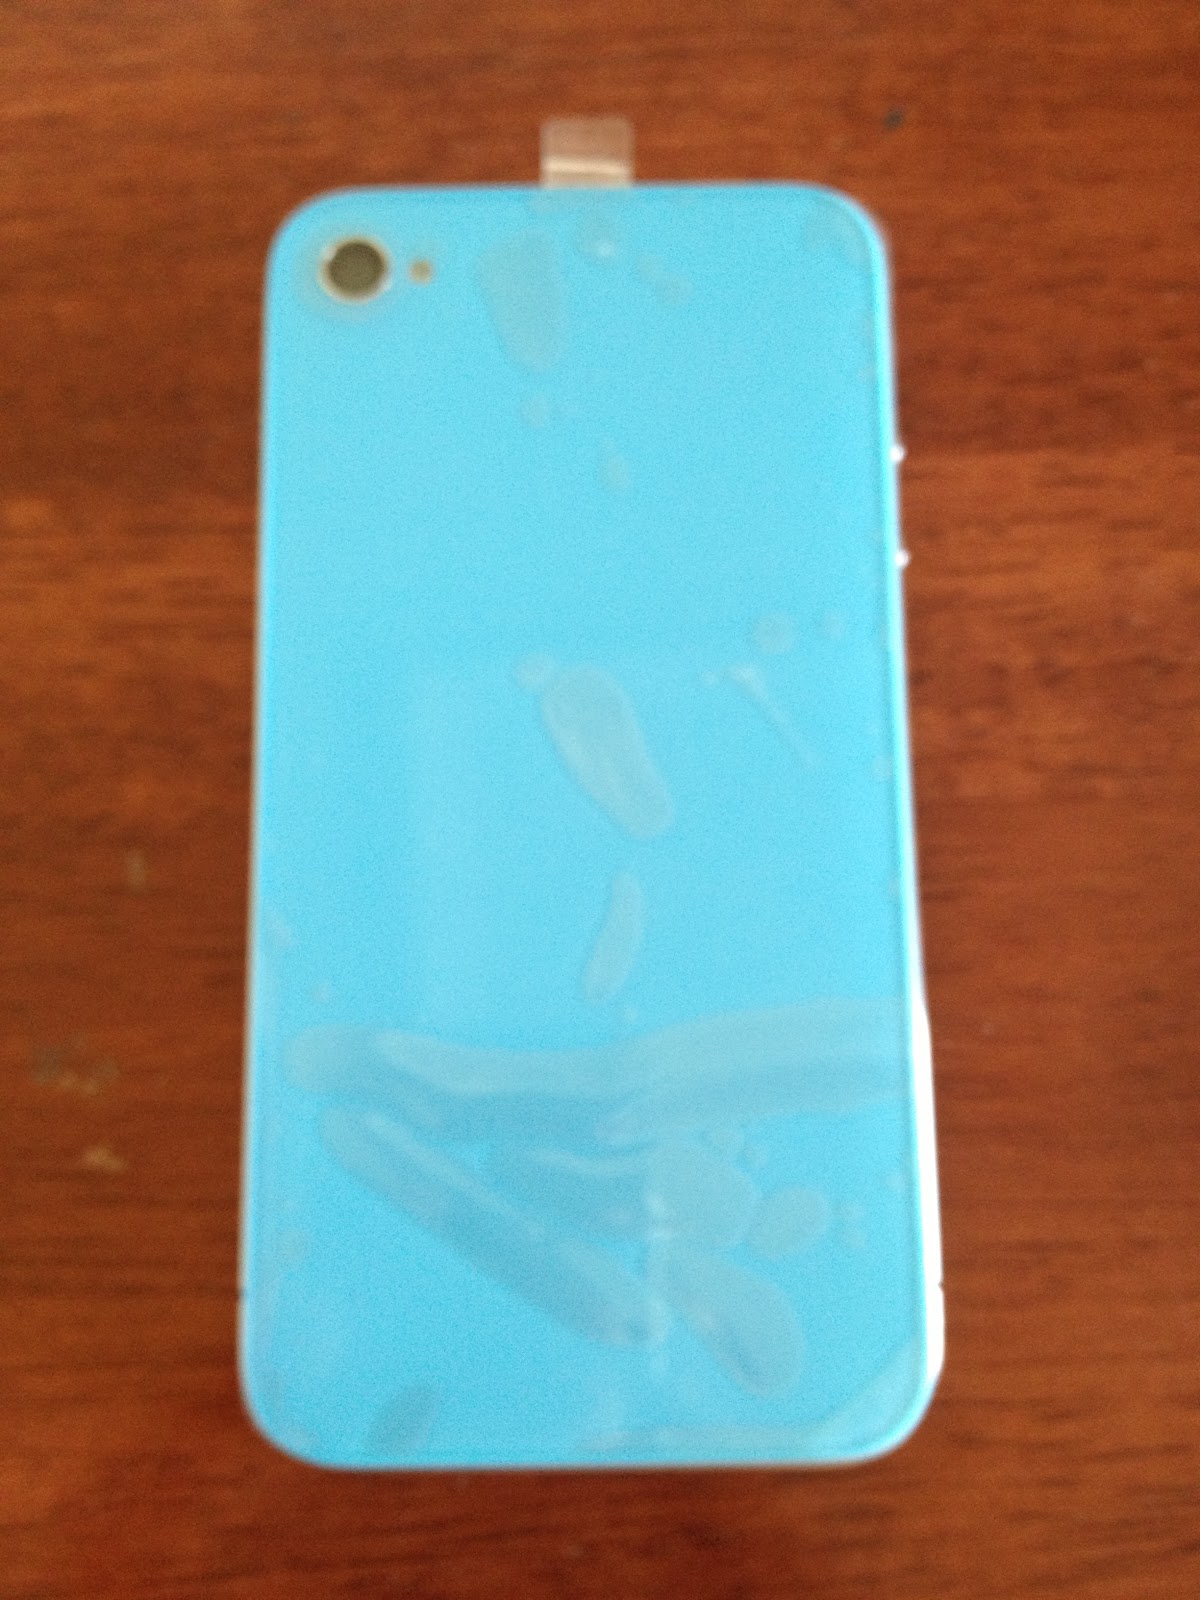 iPhone 4S (Baby Blue) for sale in Lafayette, LA!